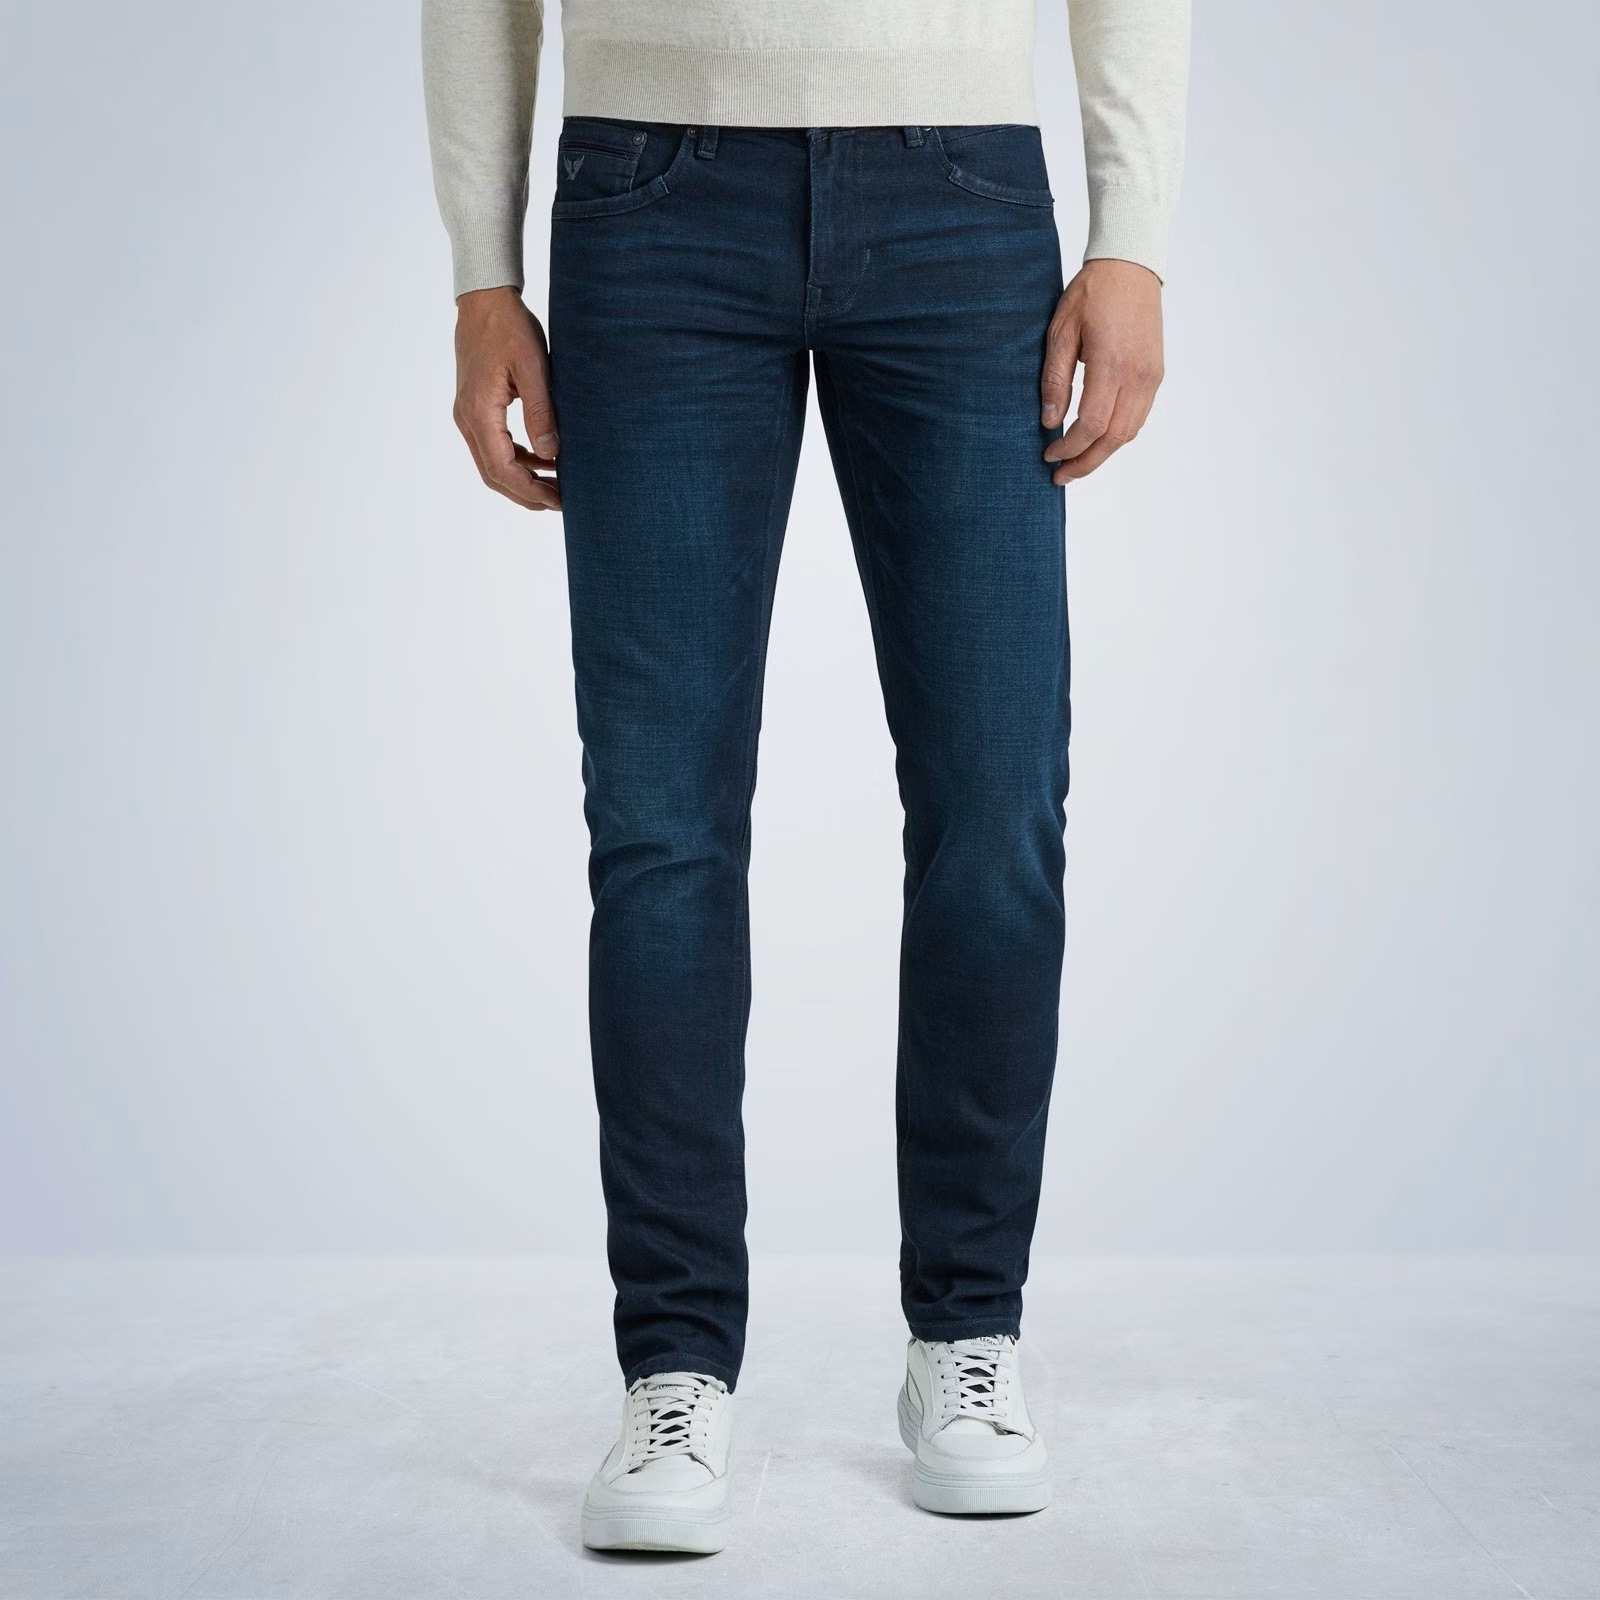 besteden Geestelijk kiezen PME Legend Tailwheel Jeans - Old Stable